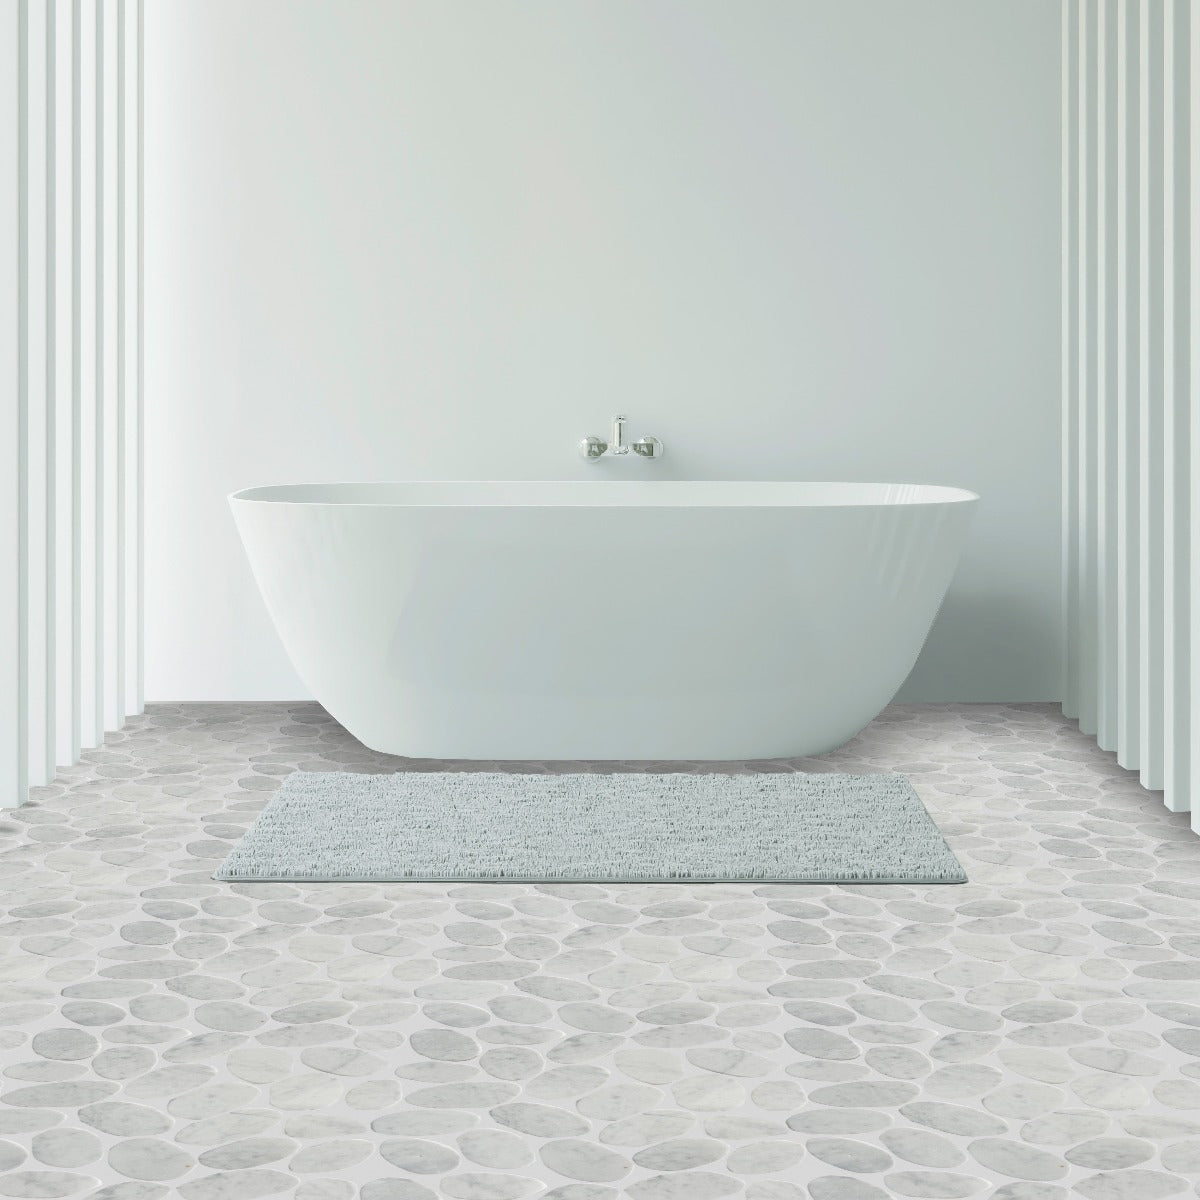 XL Slice Carrara tile flooring with white bathtub and bathmat on top of it